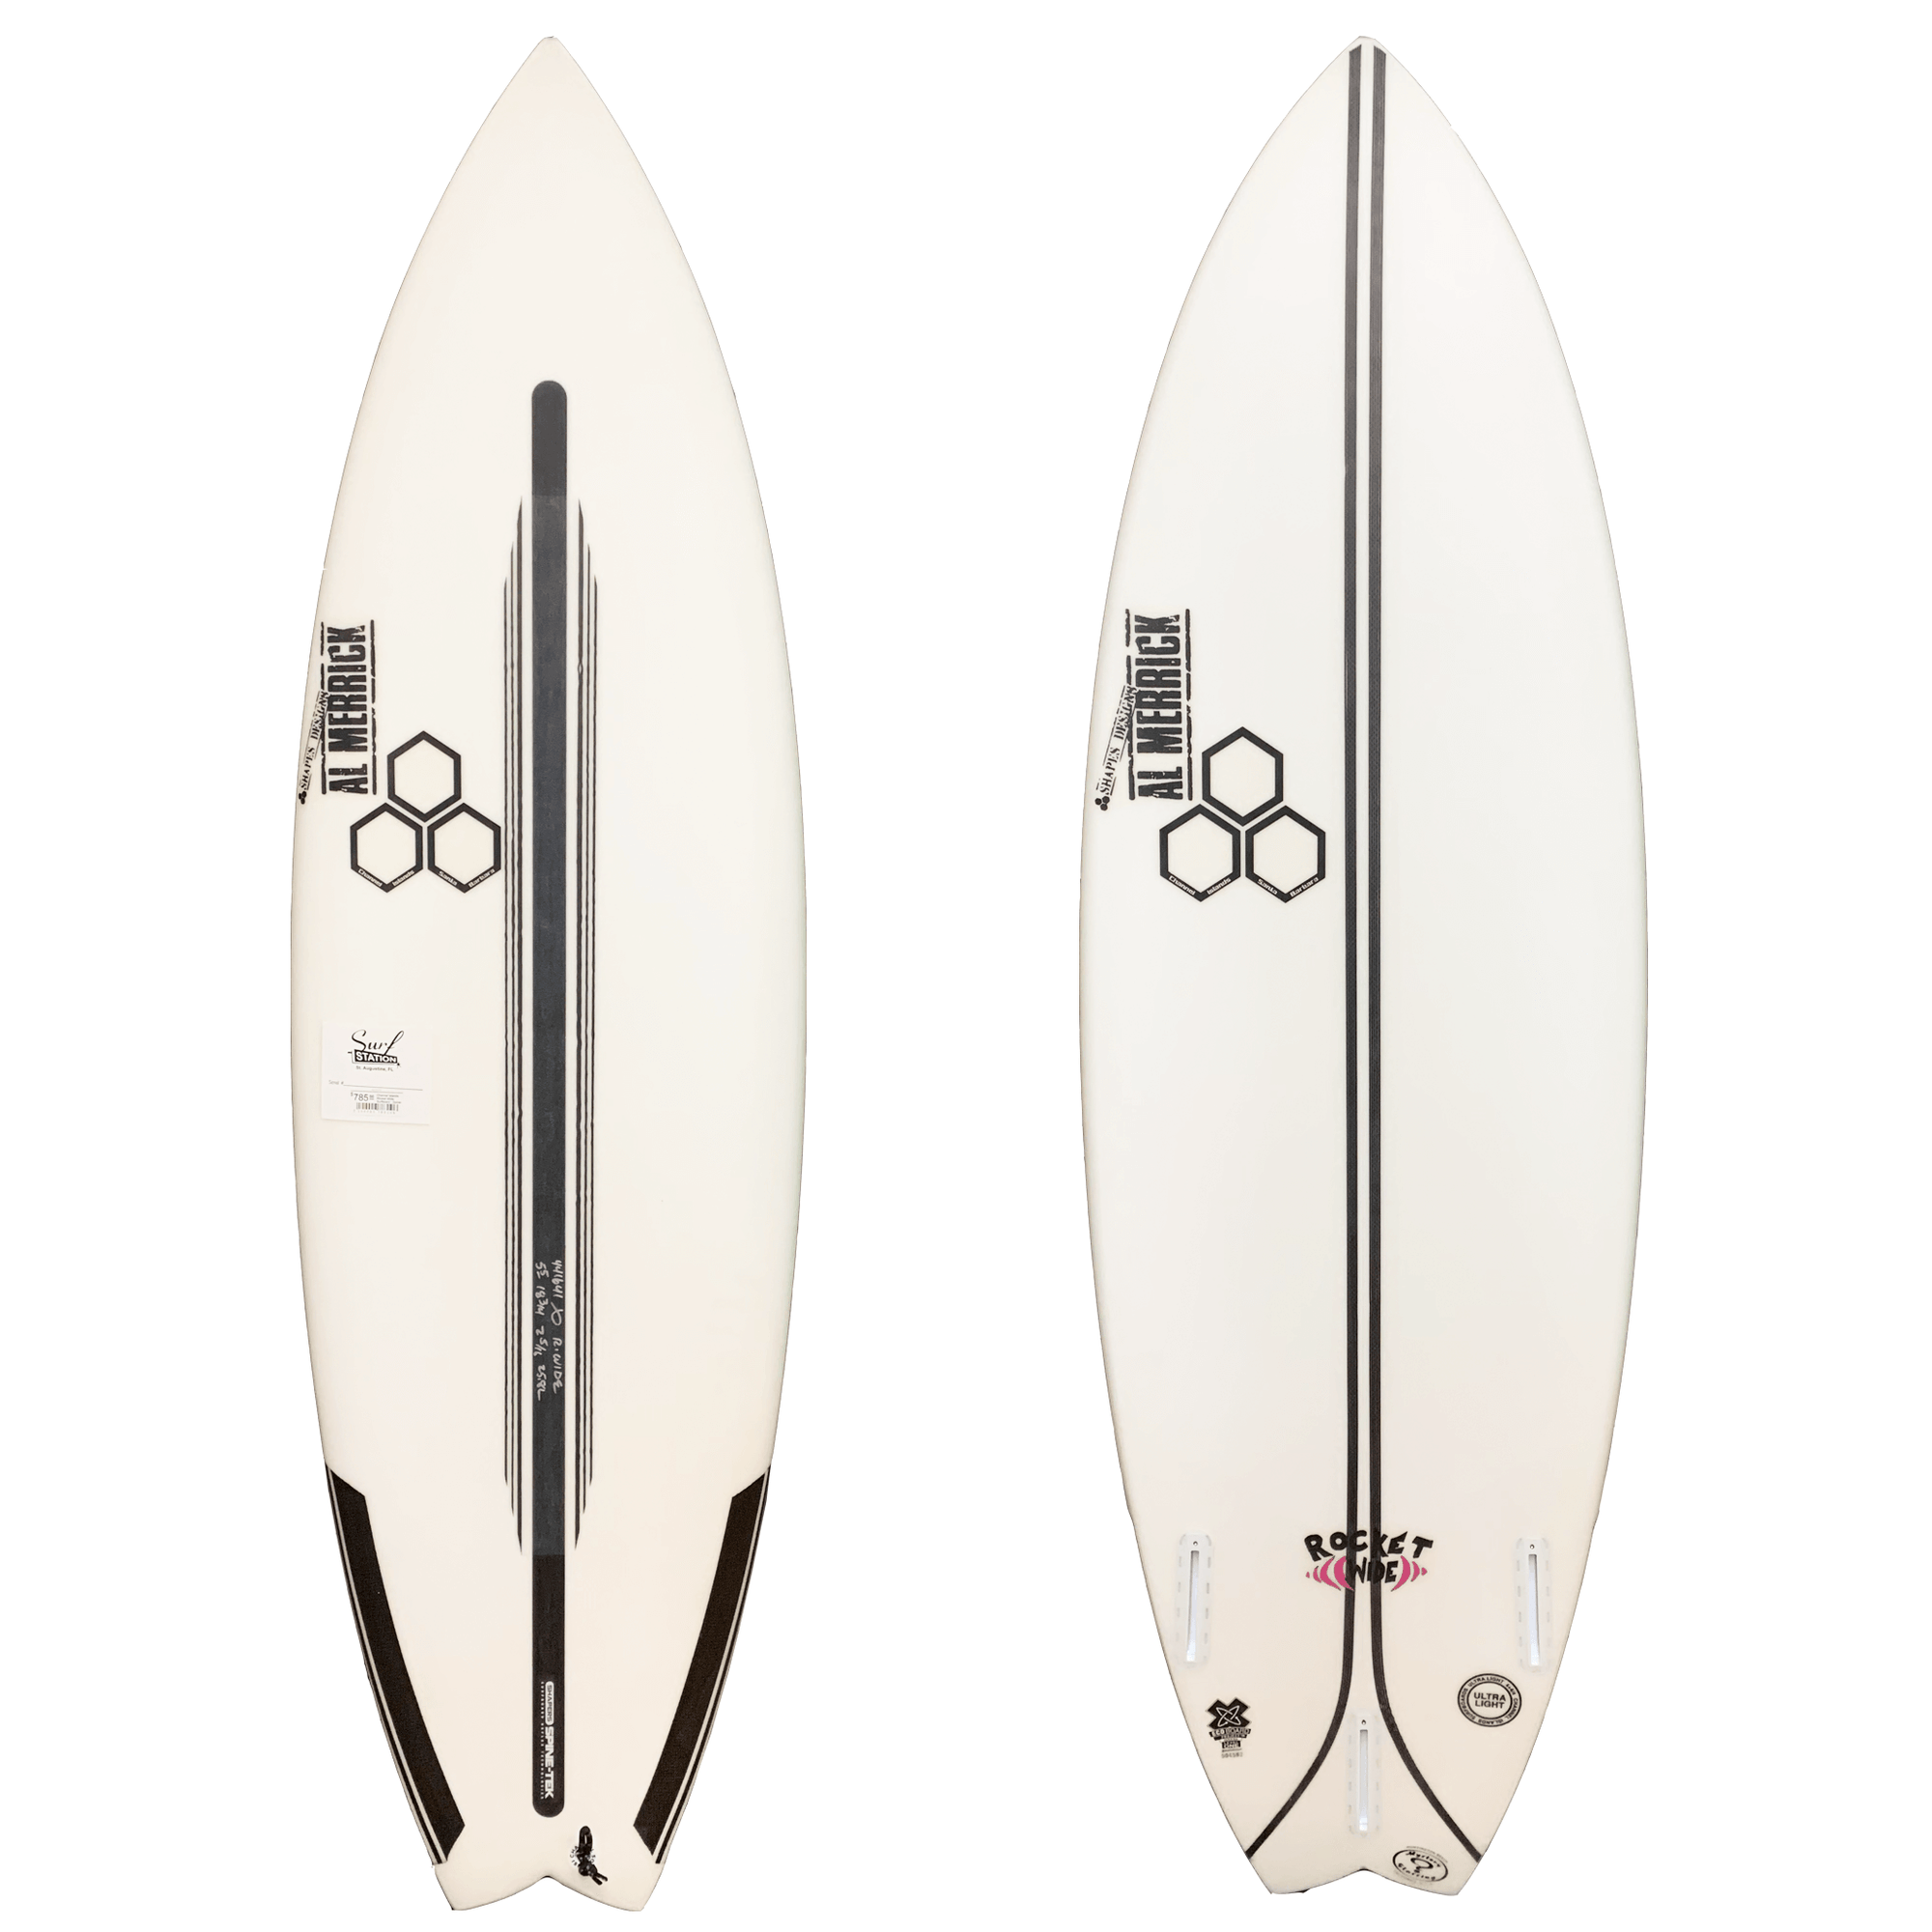 Channel Islands Rocket Wide Spine-Tek Surfboard - Futures